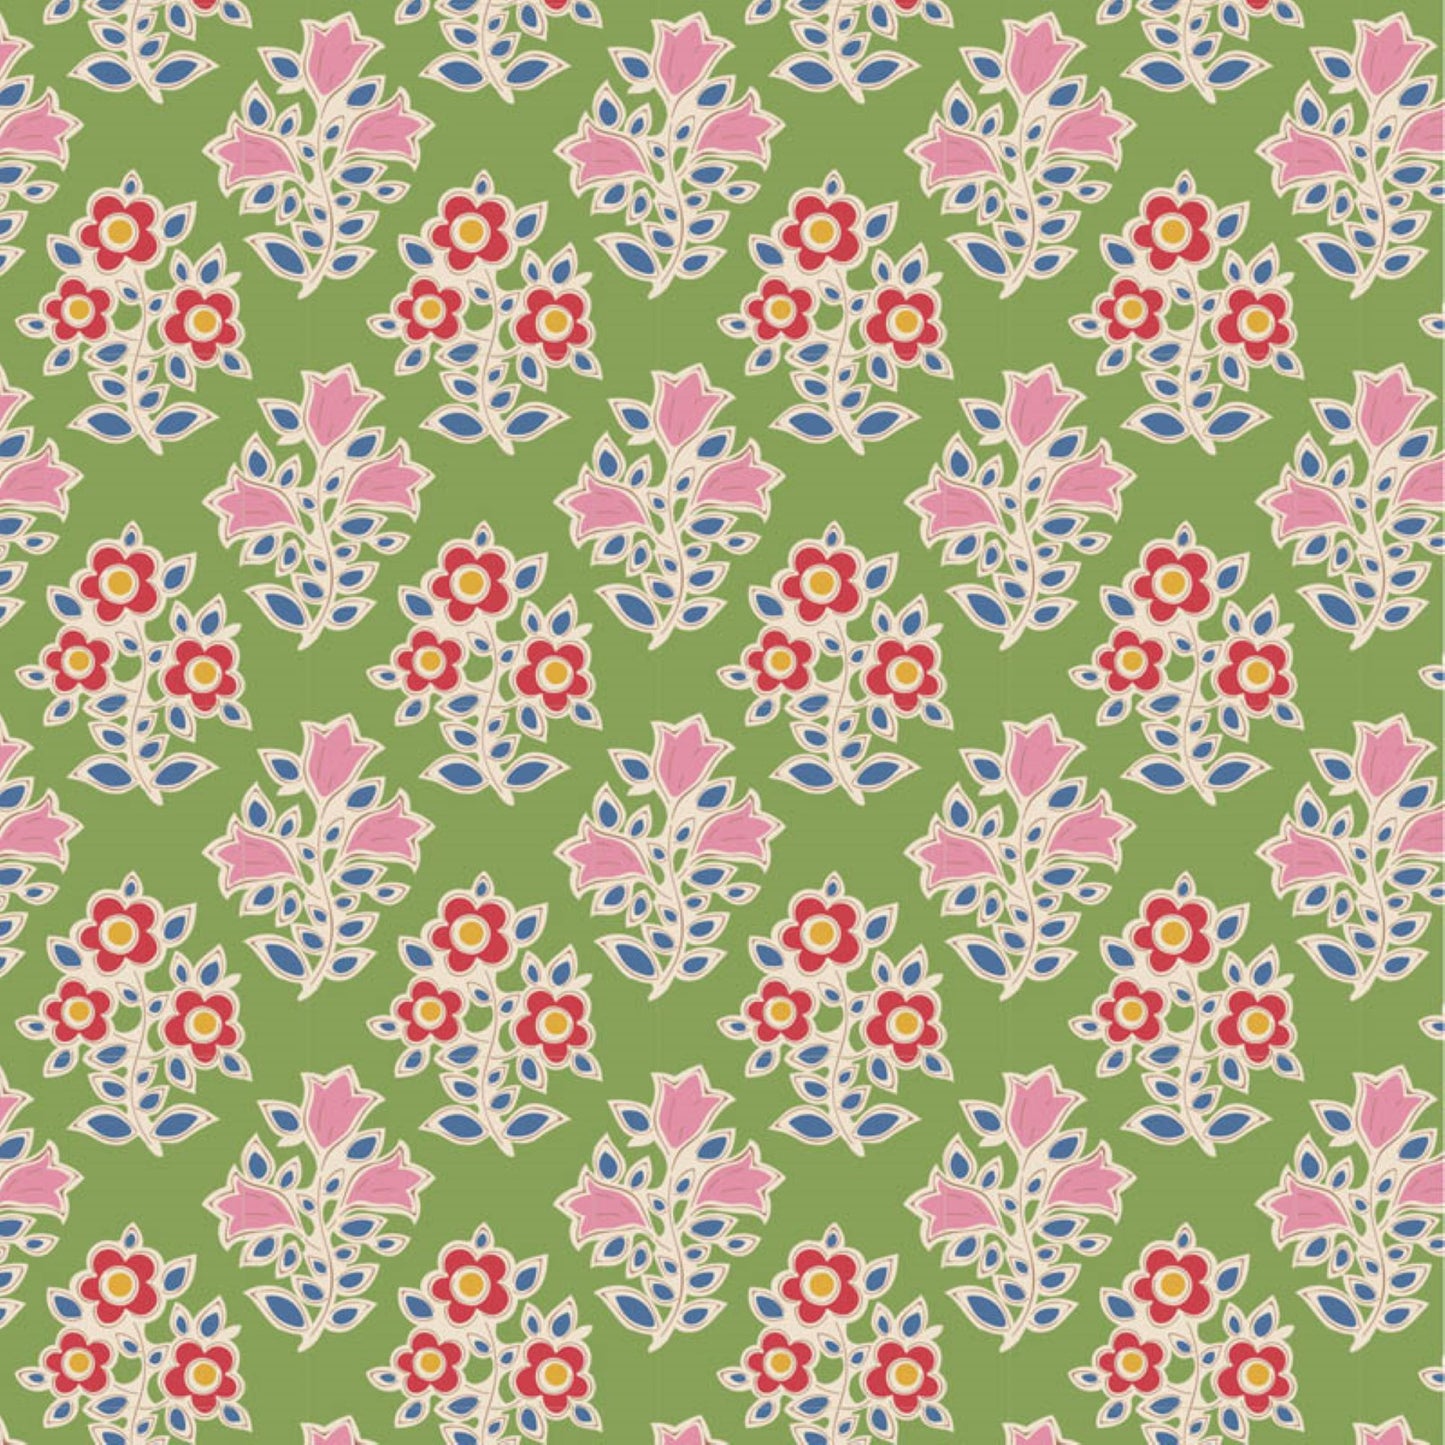 Tilda Jubilee and Flower Farm floral cream teal bundle 7 Fat Quarters cotton quilt fabric